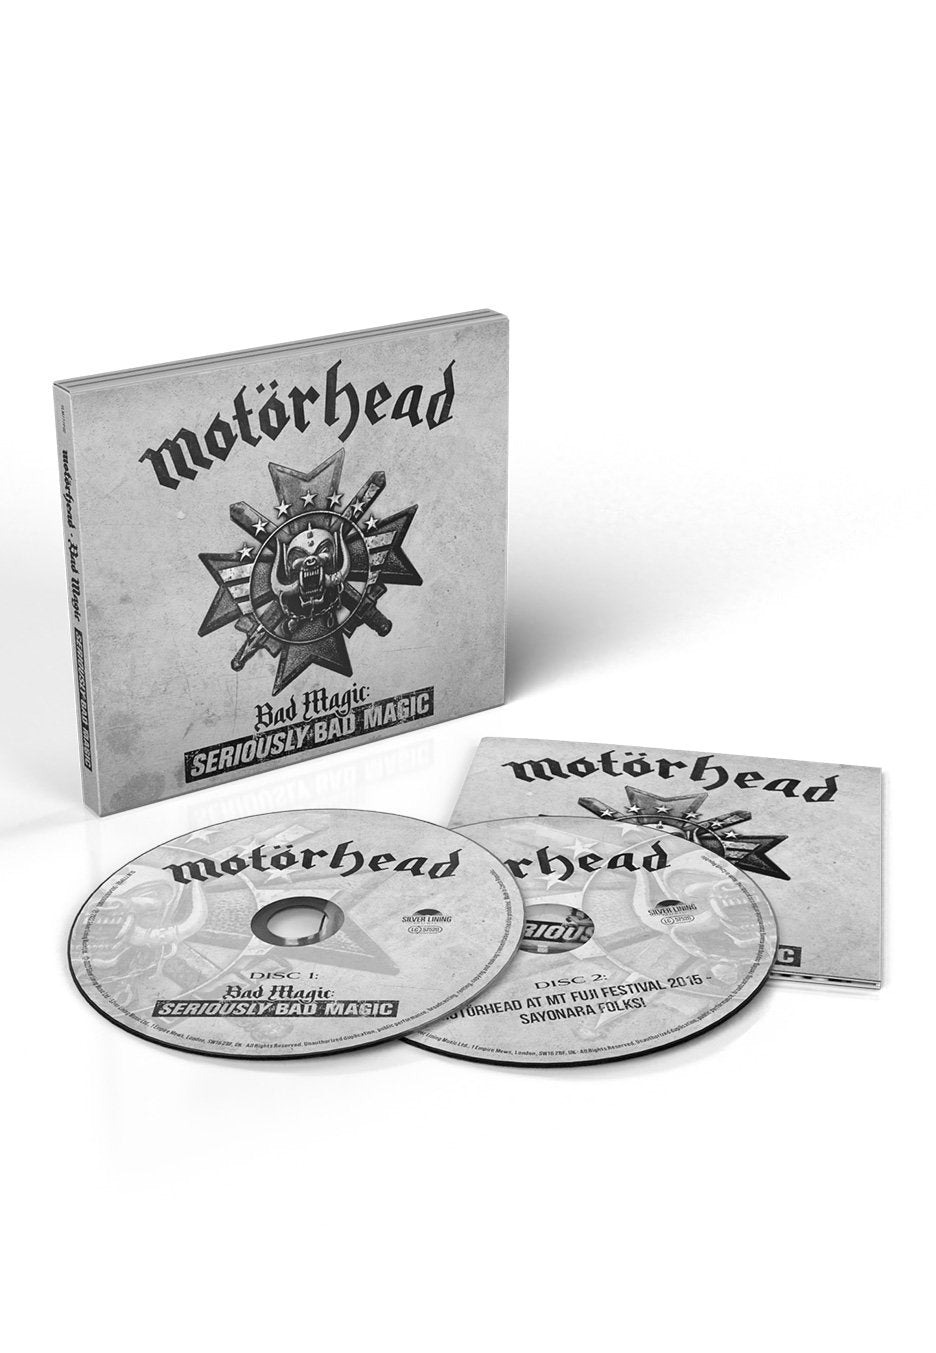 Motörhead - Bad Magic: SERIOUSLY BAD MAGIC - Digipak 2 CD